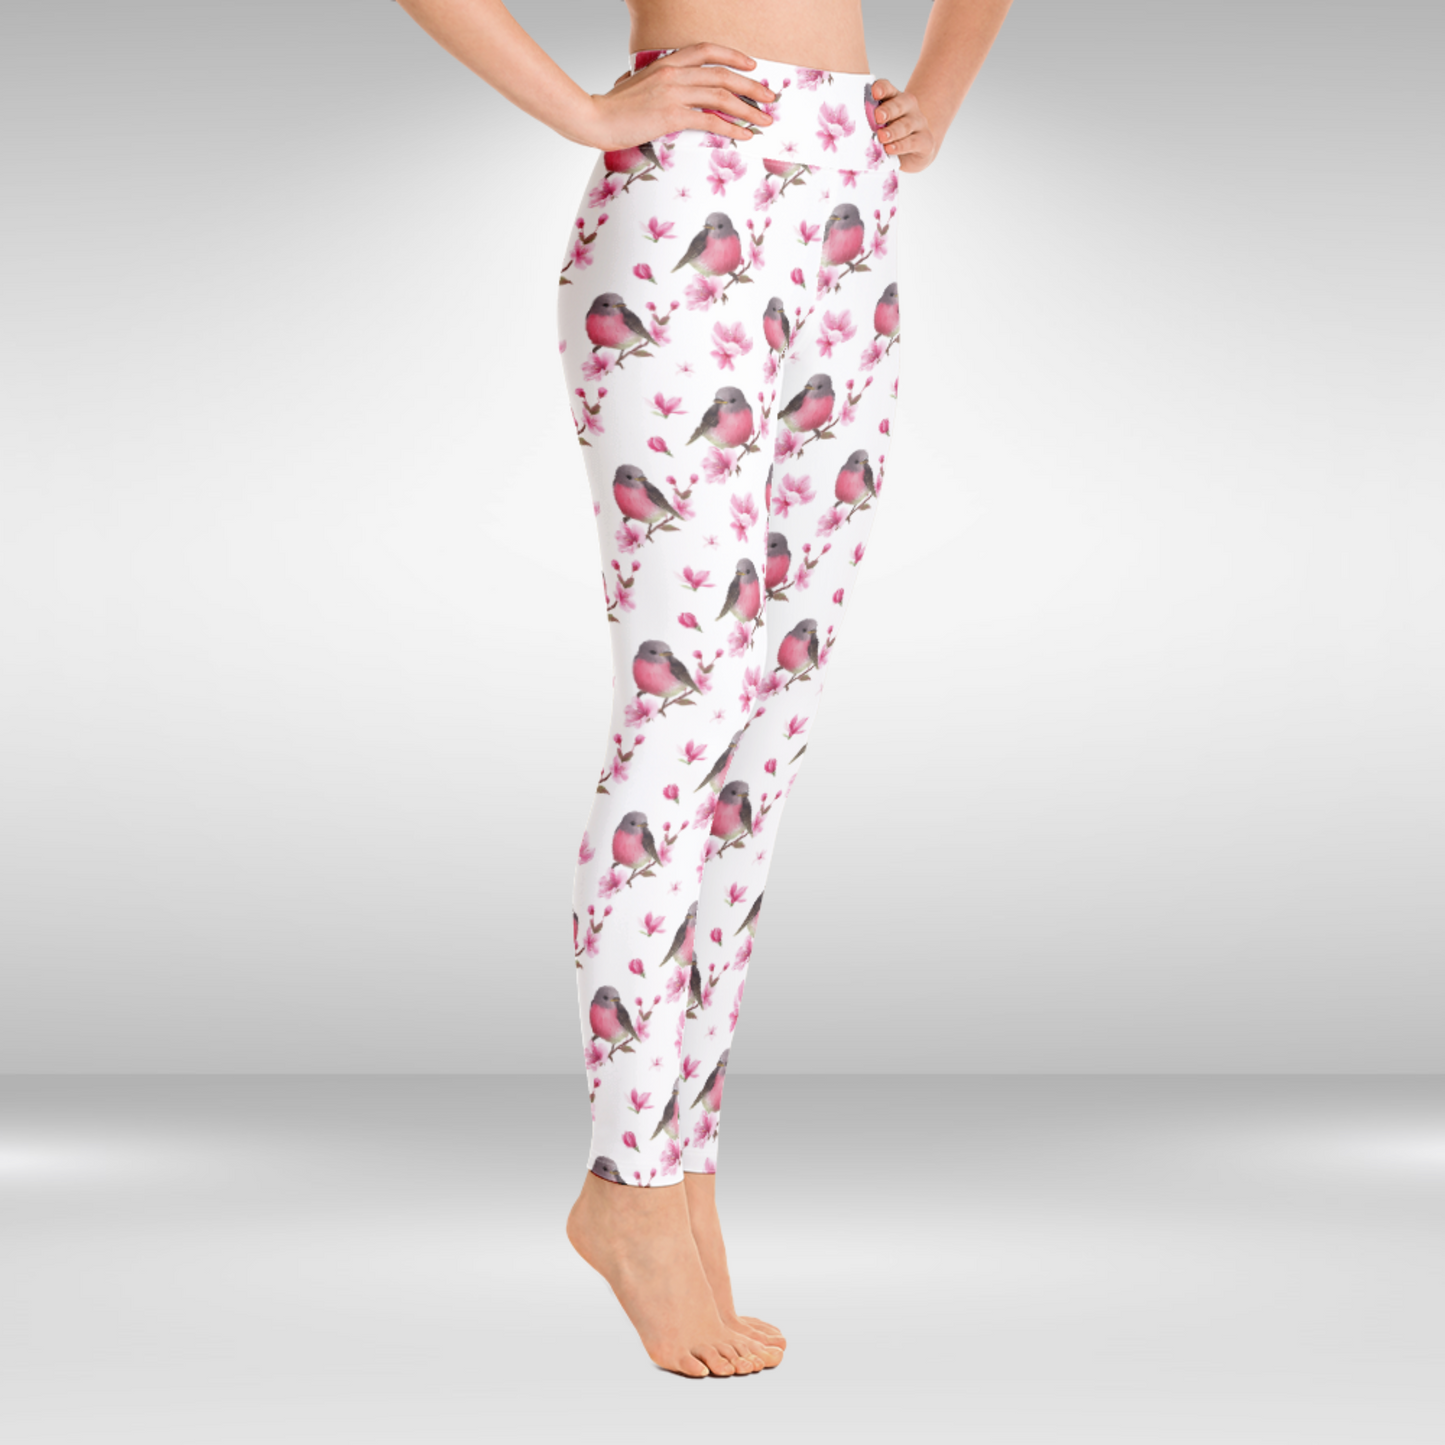 Women Yoga Legging - White and Pink Bird Print